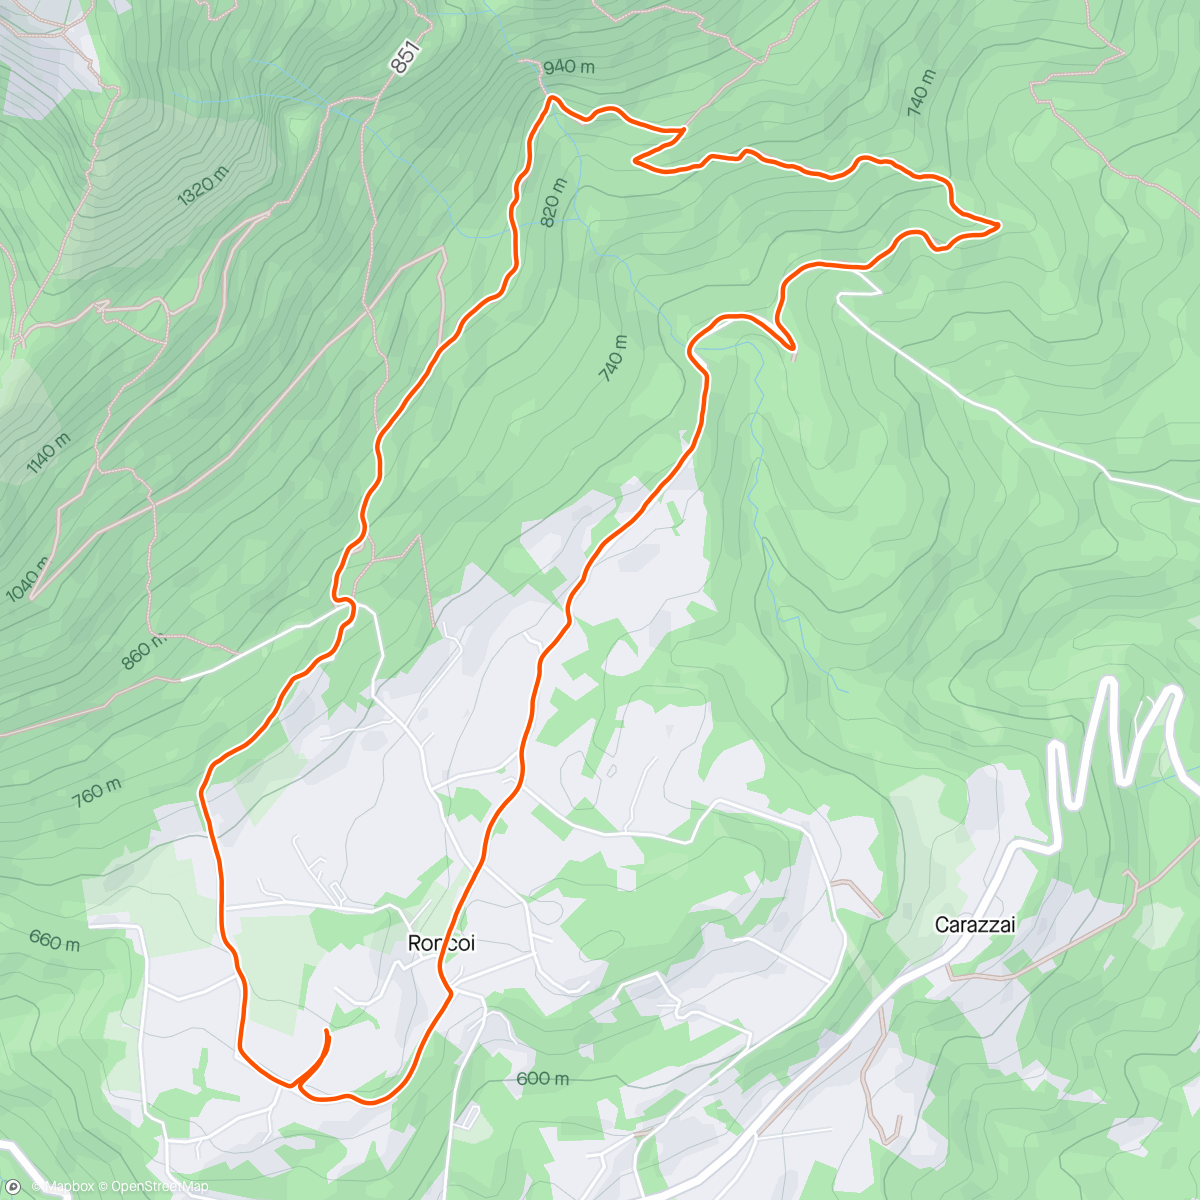 Map of the activity, Giro serale del Cadin